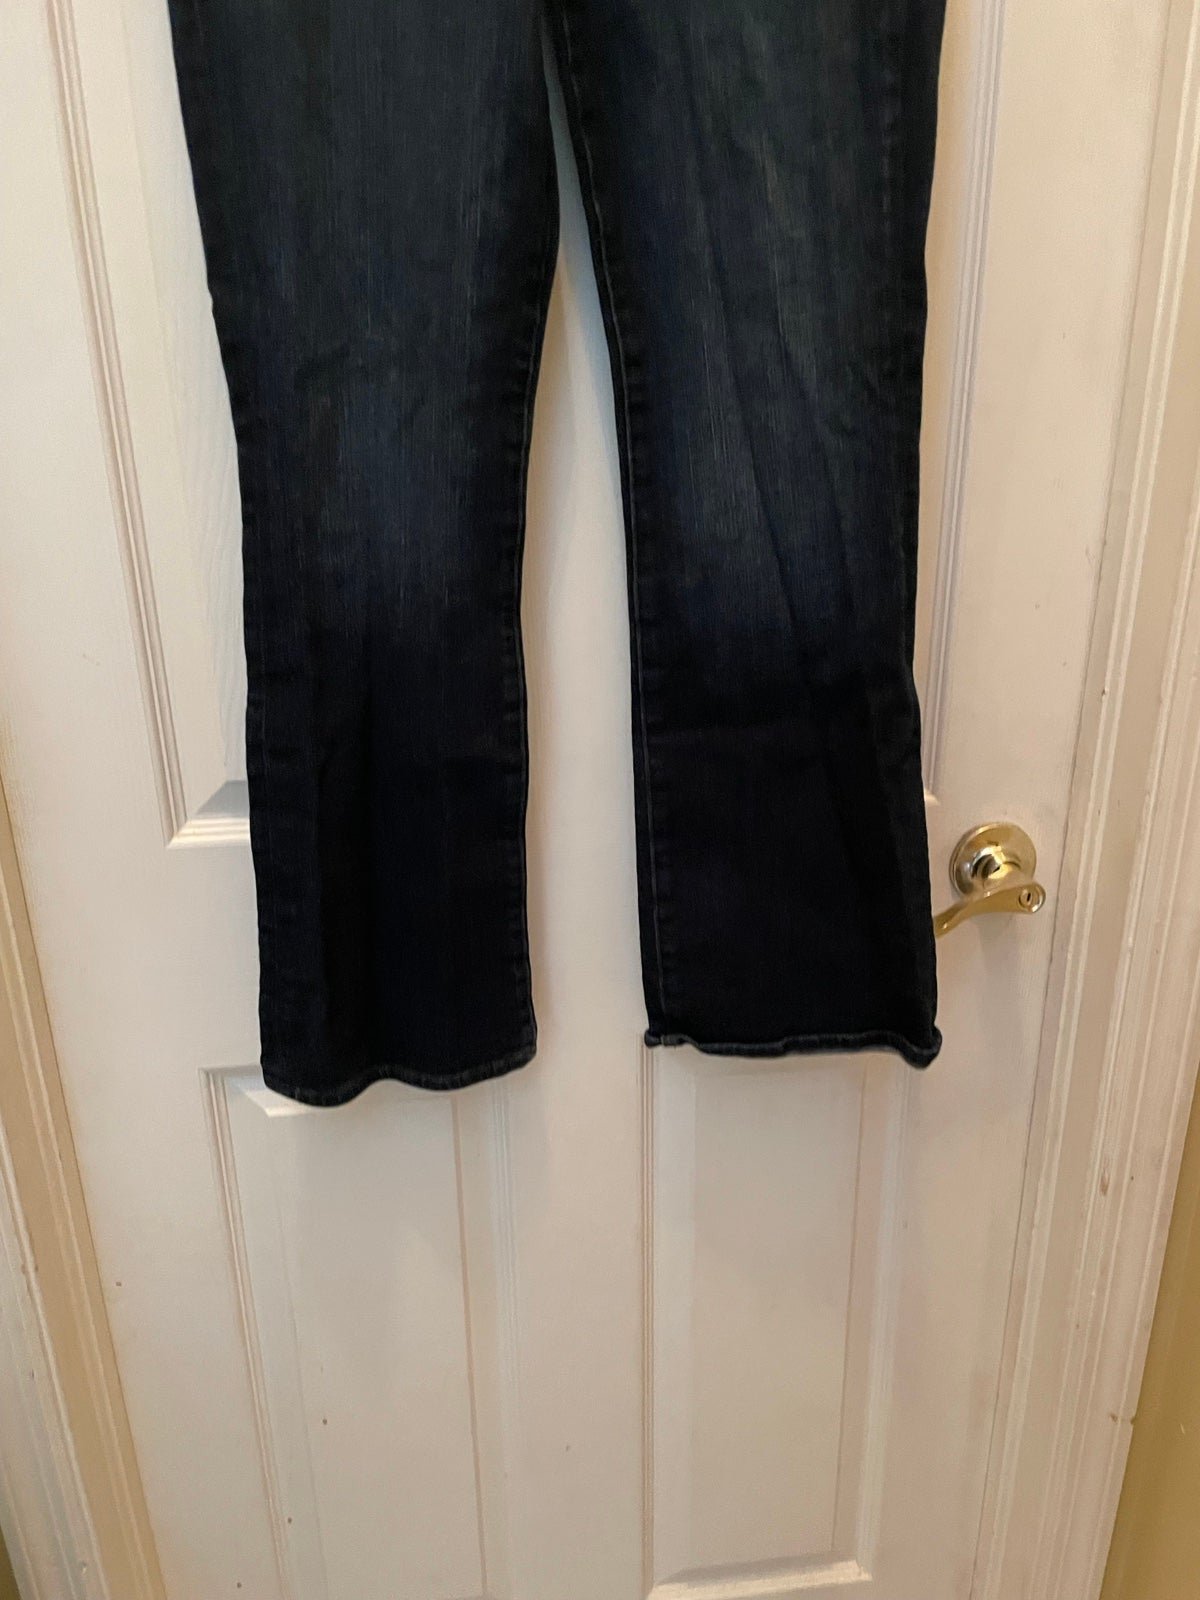 Custom Lucky Brand jeans frKK4QDKi on sale